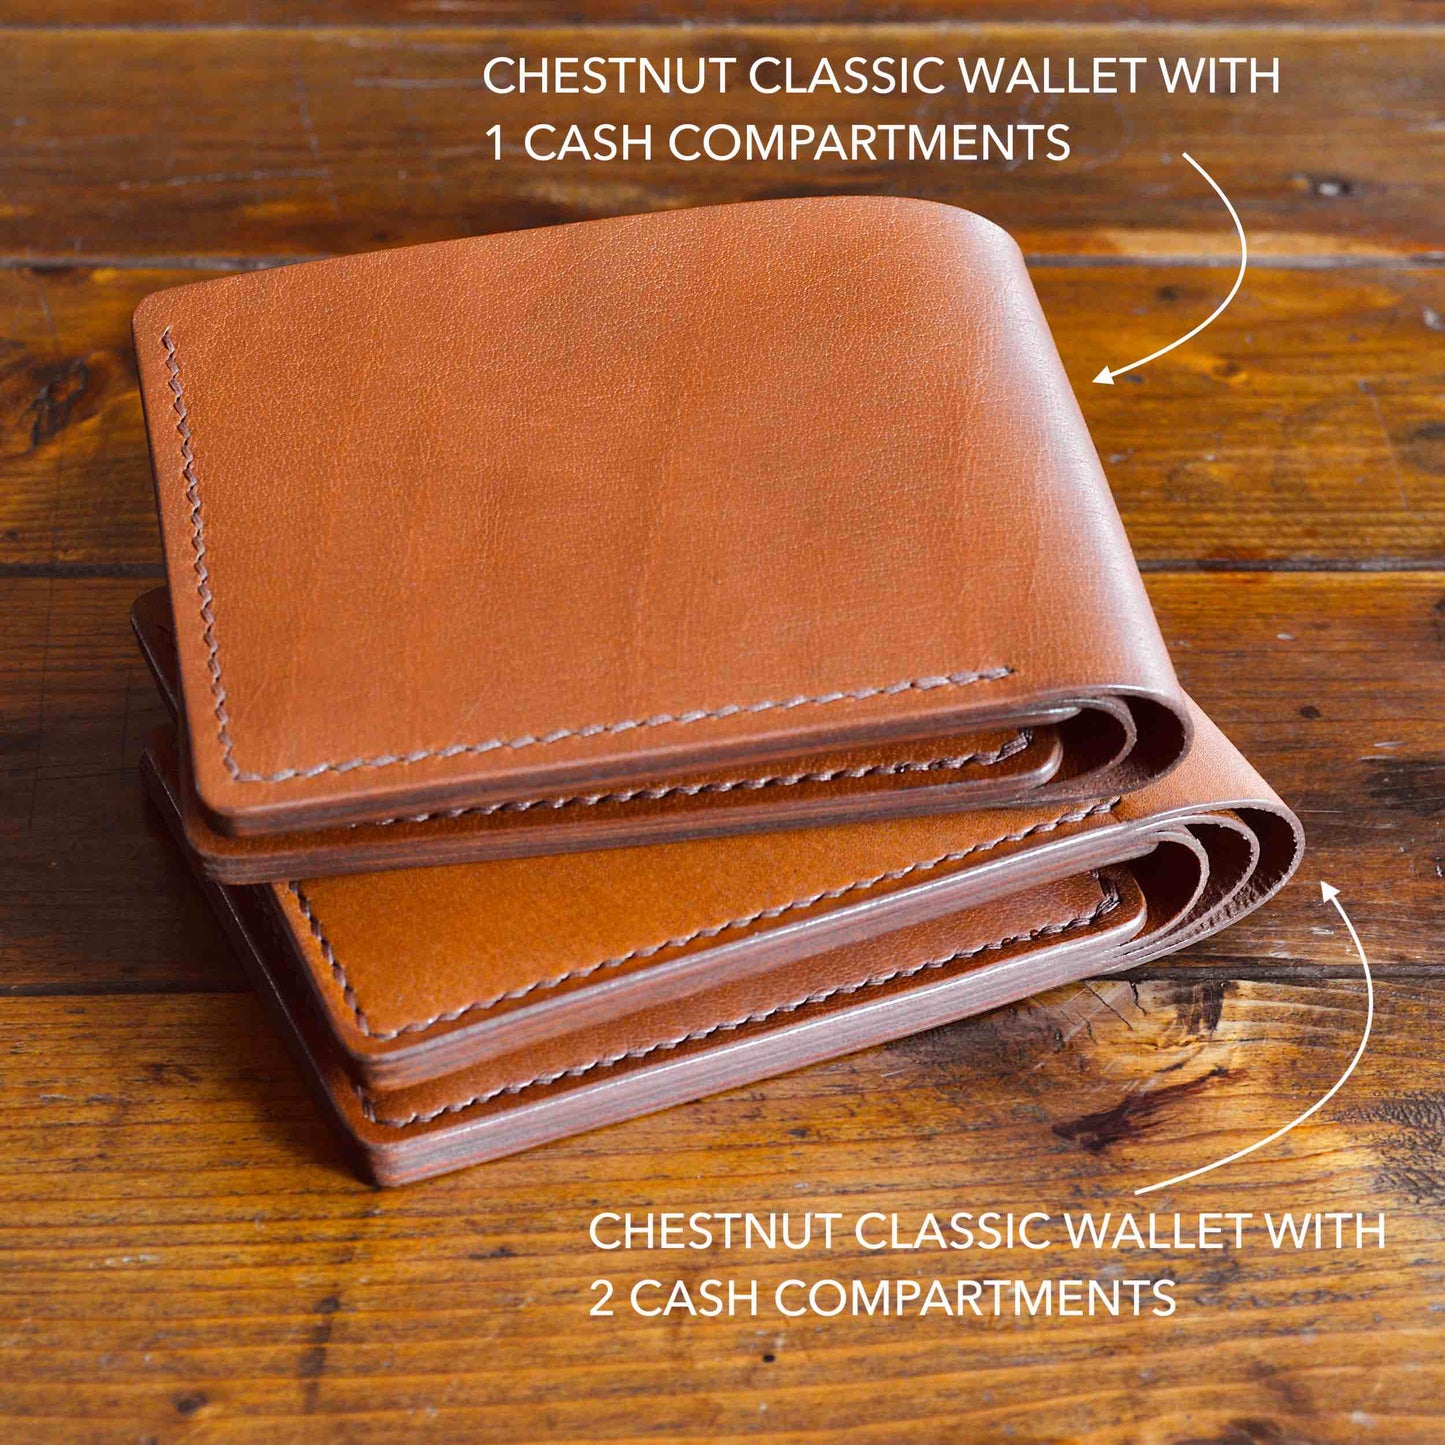 Classic Wallet - Chestnut